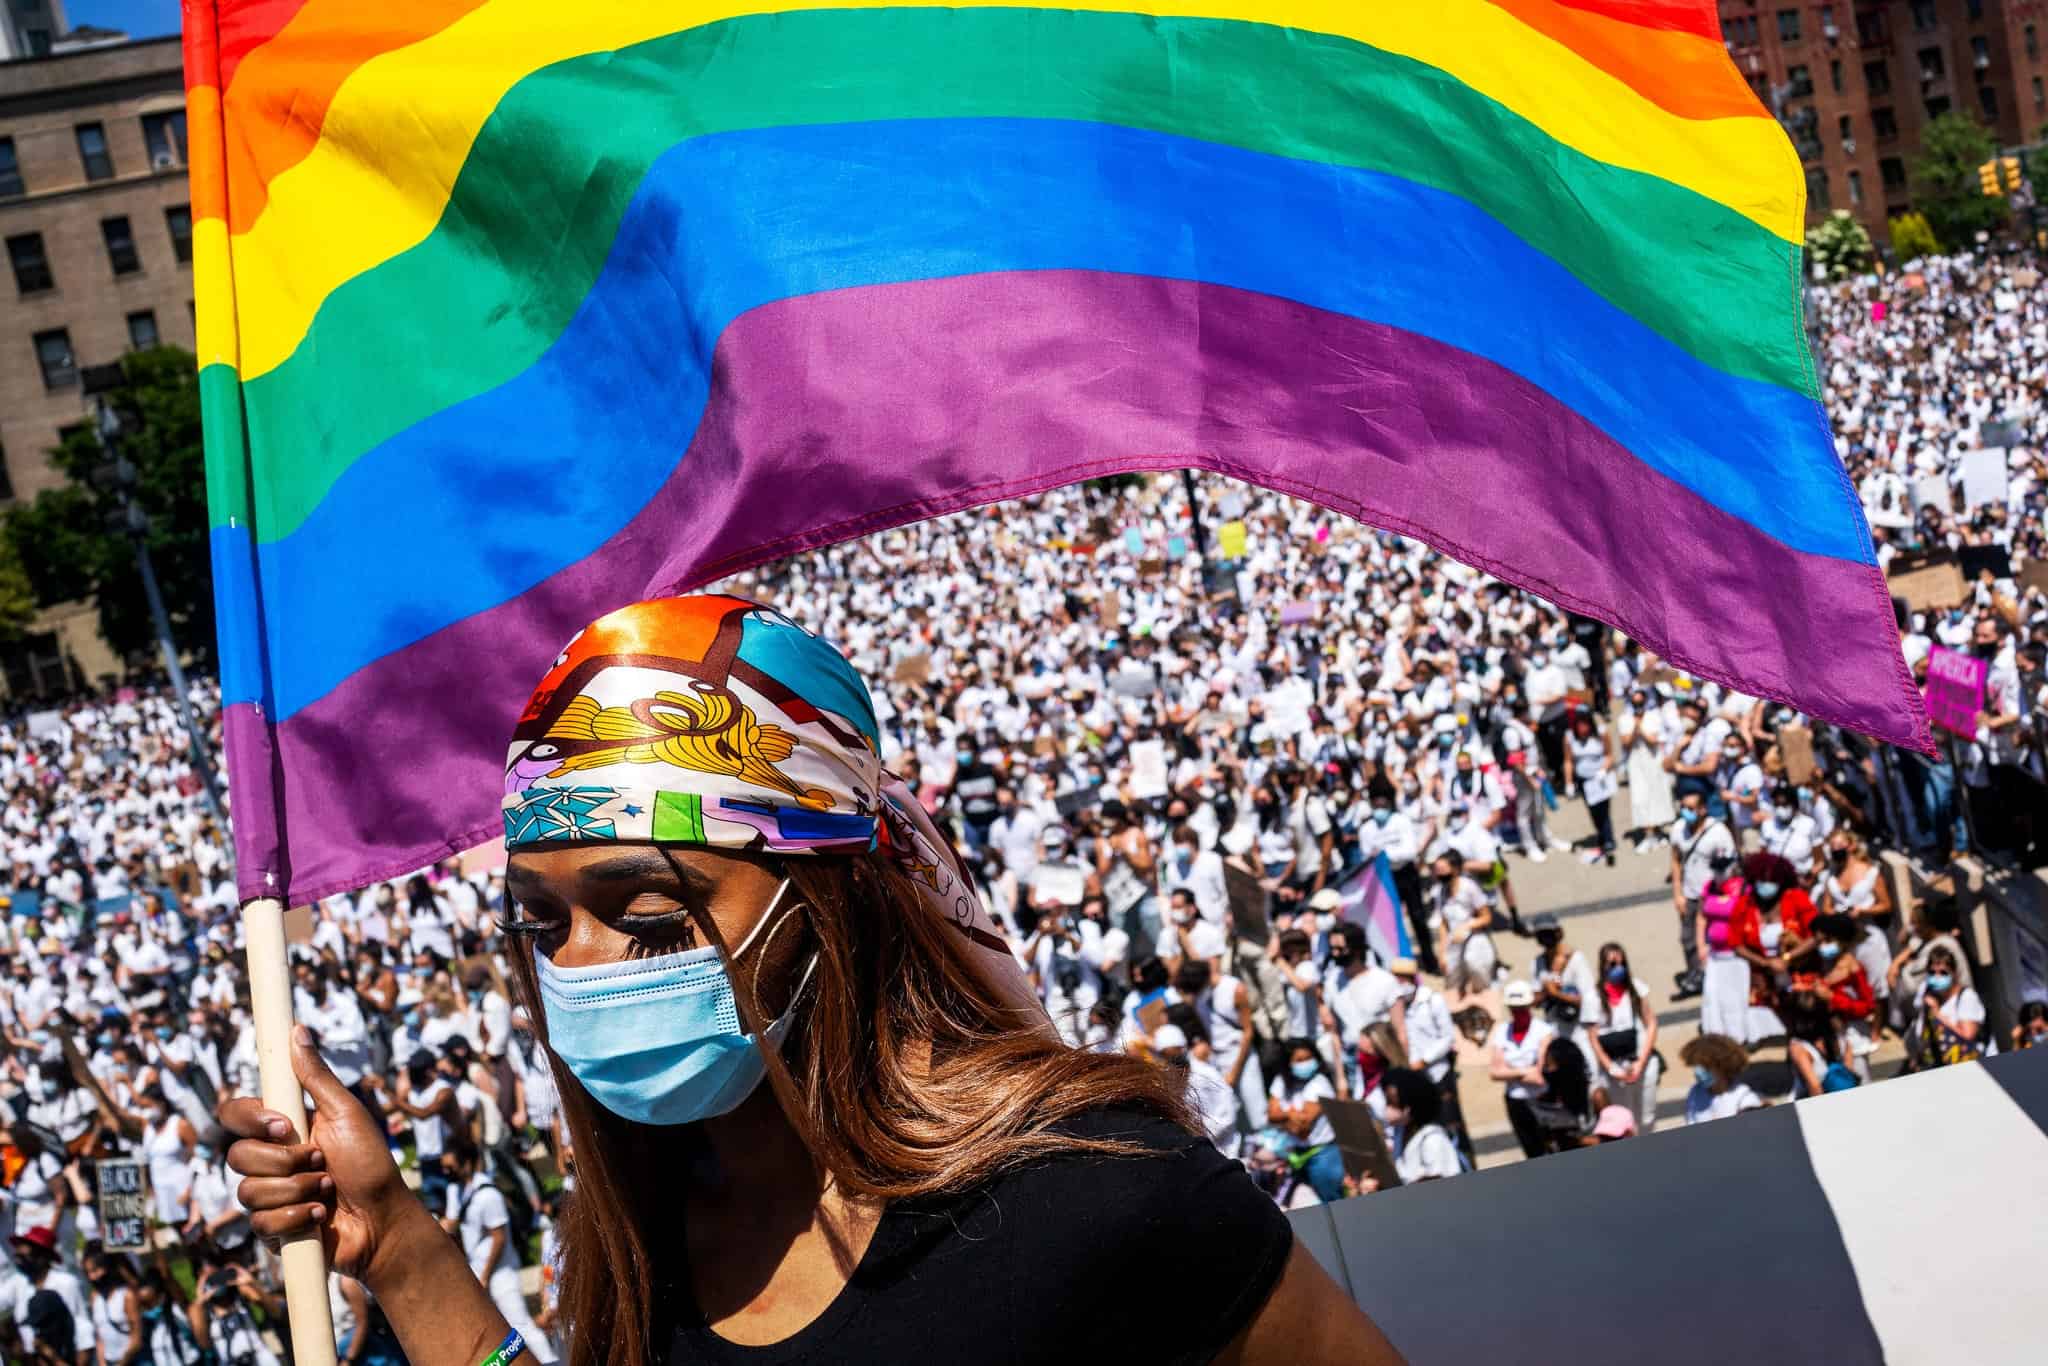 Indias gay community living under shadow of fear